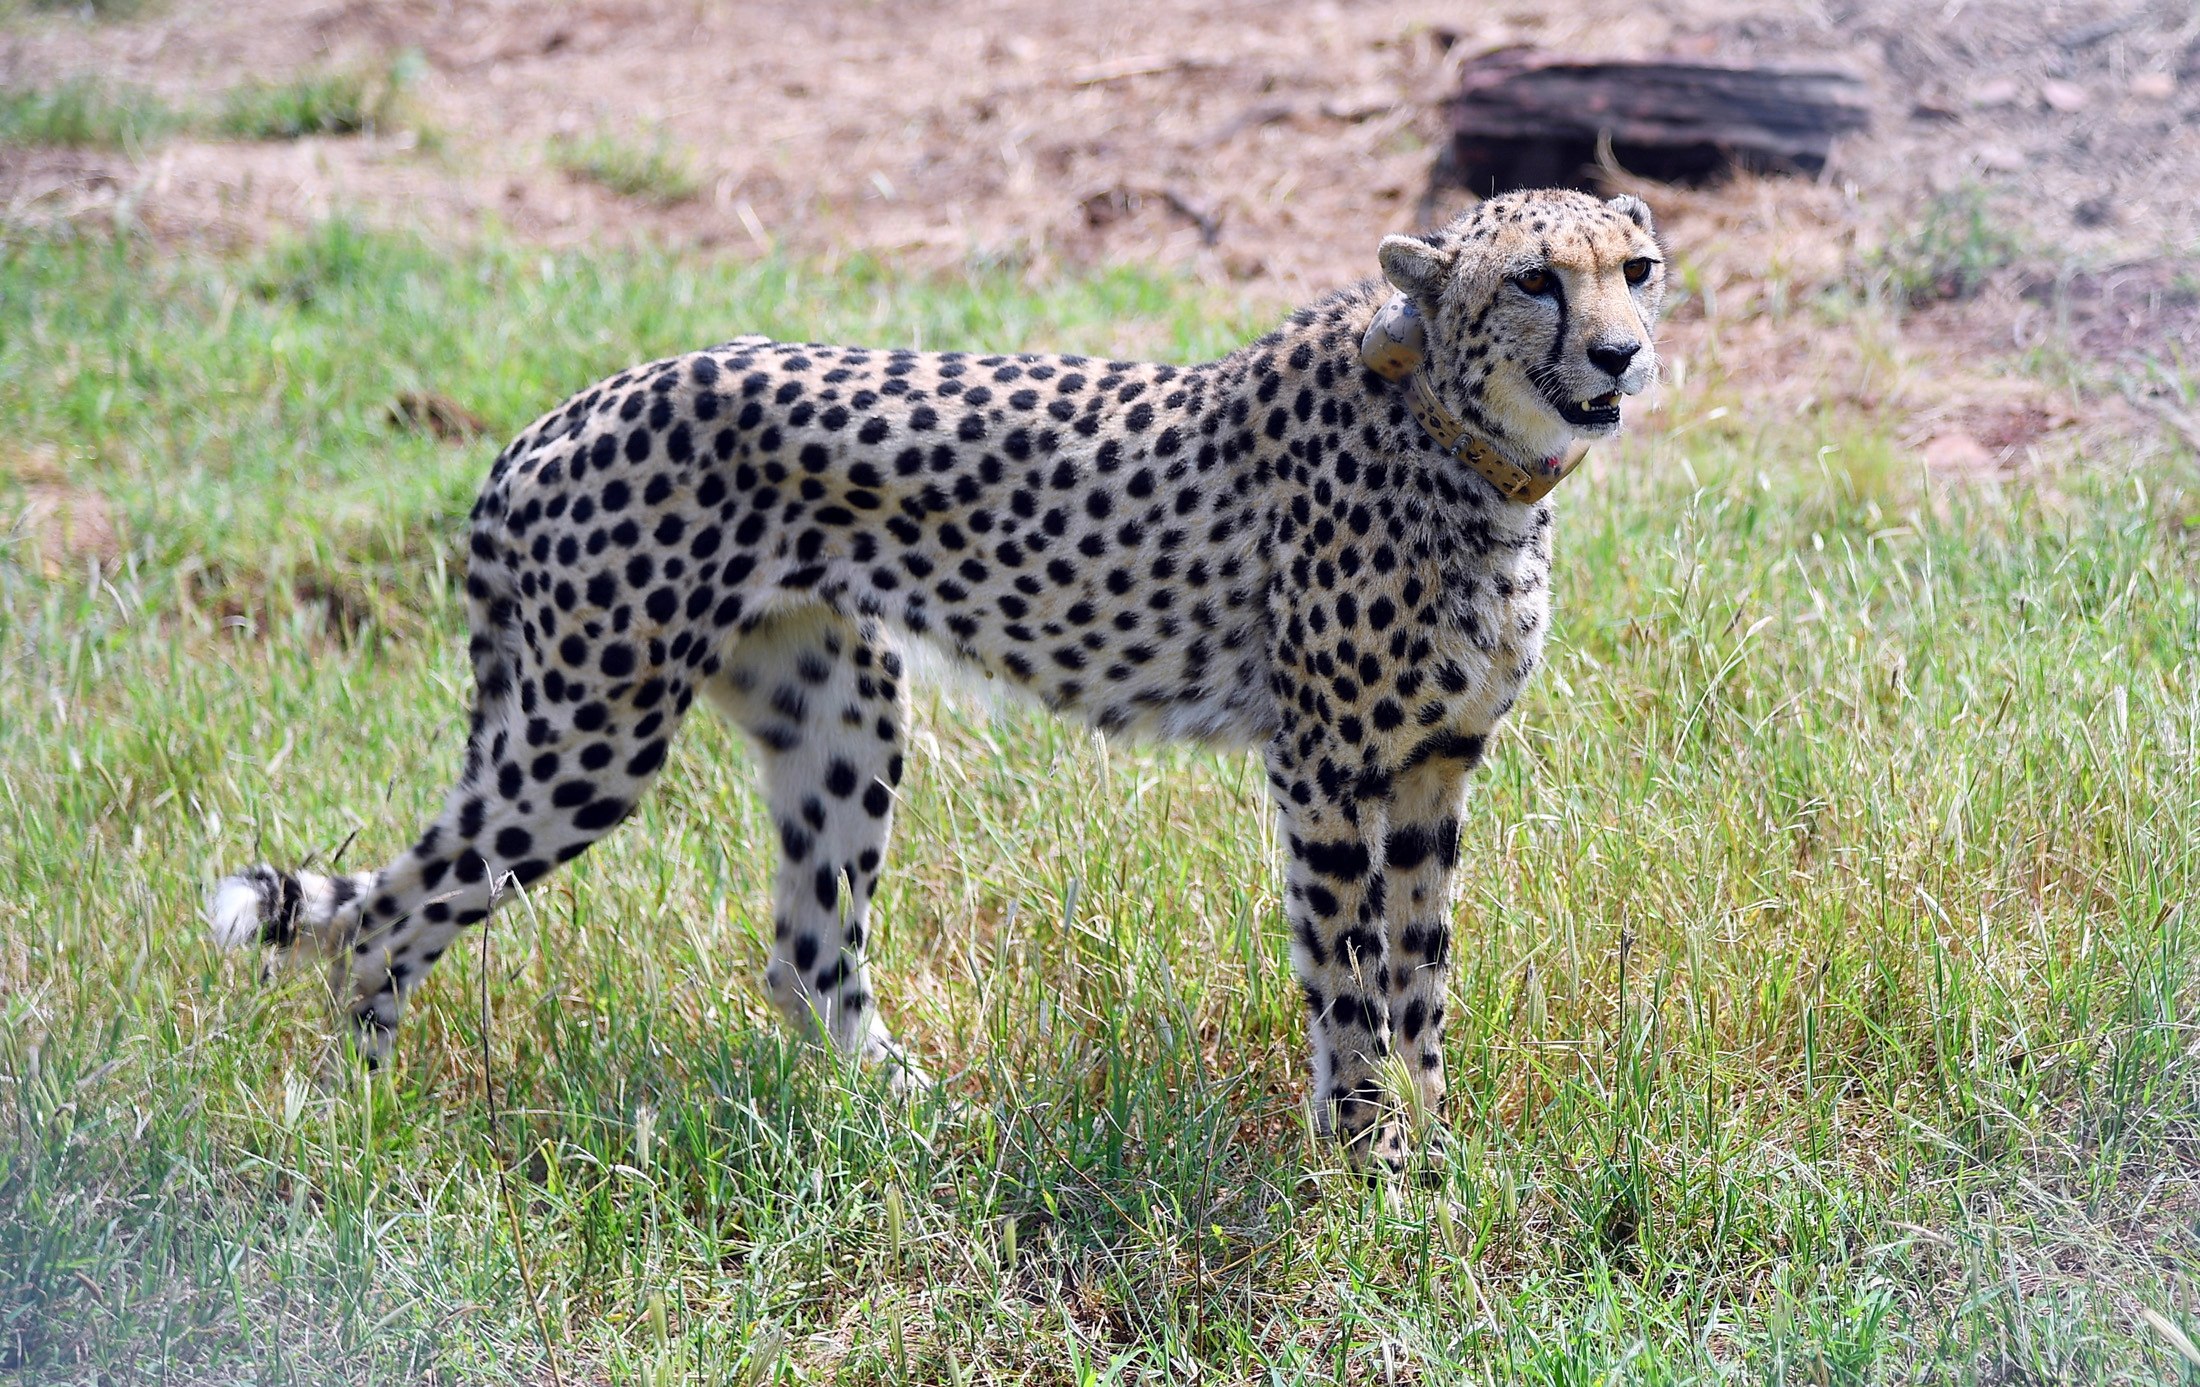 A Namibian cheetah in Kuno National Park, Madhya Pradesh, India. Photo: EPA-EFE